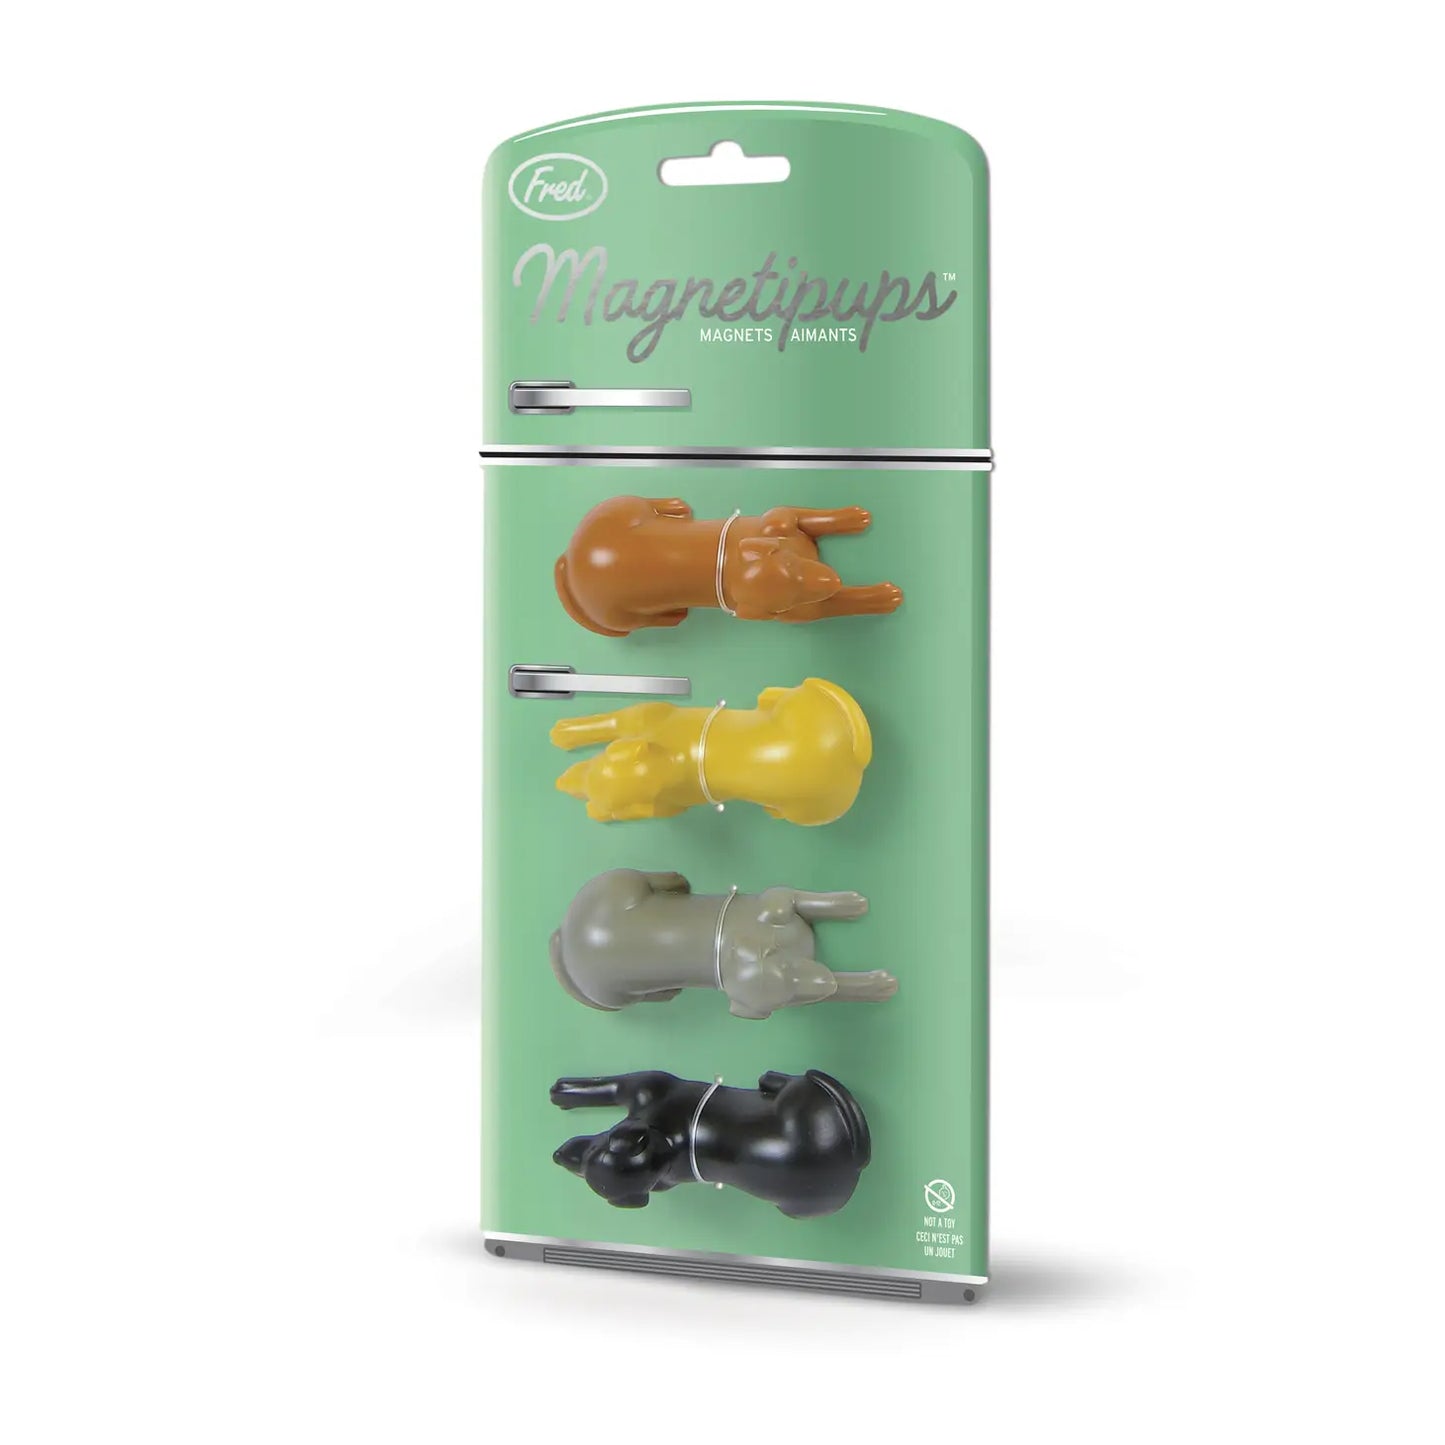 Fred- Magnetipups- Magnets